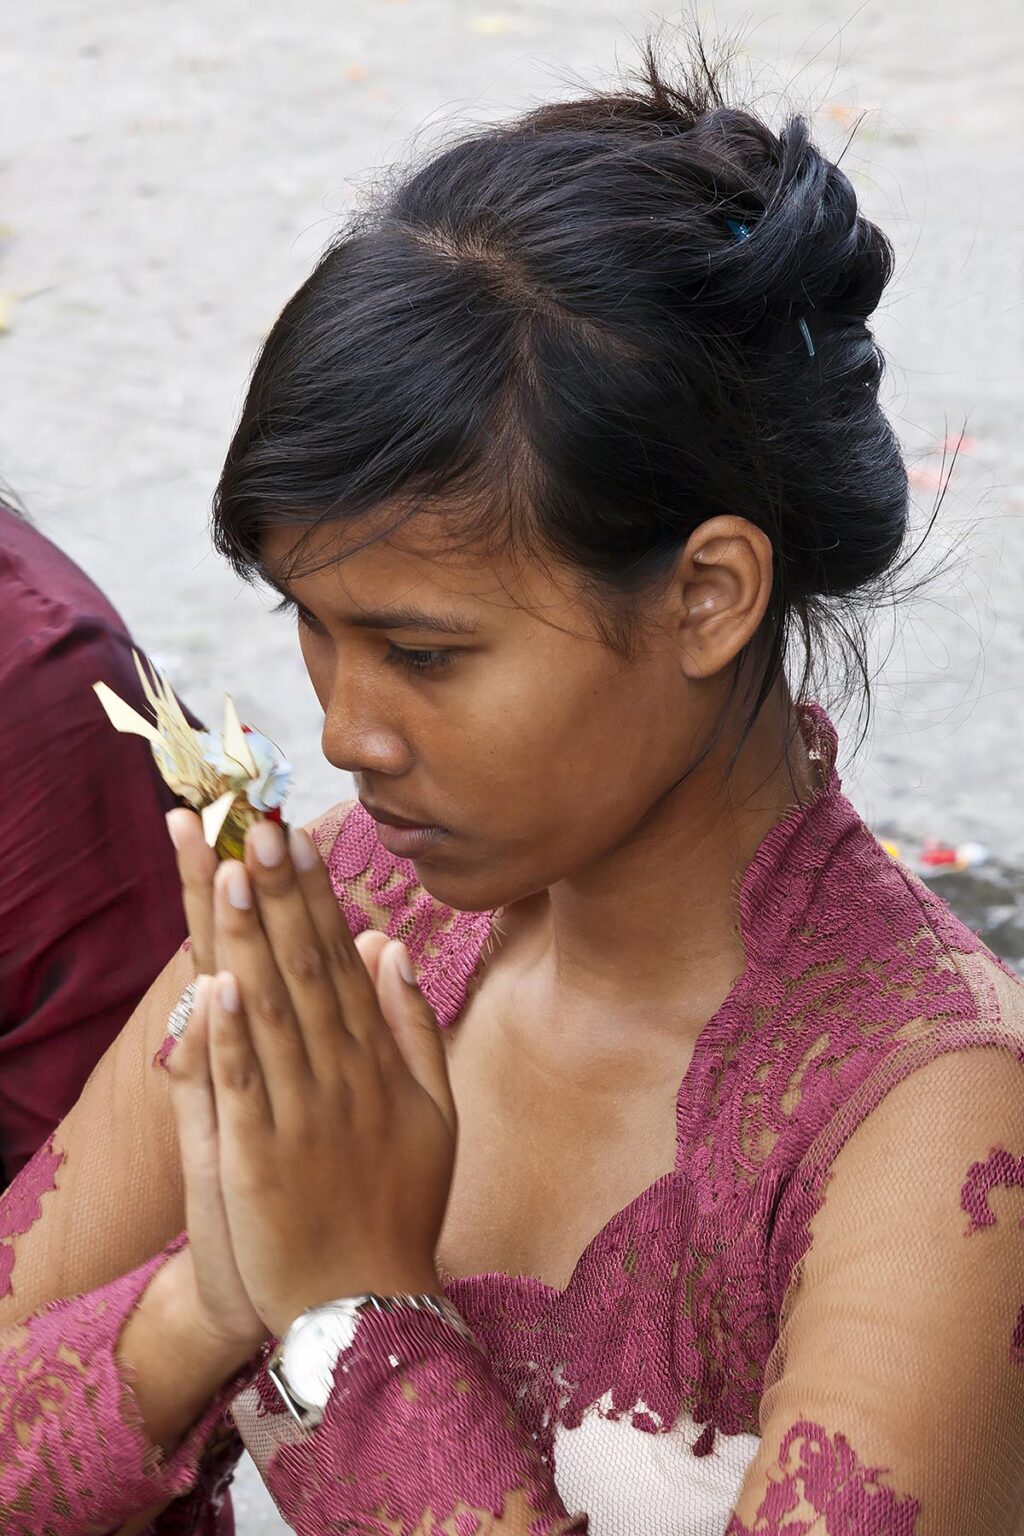 Hindu Women pray at the PURA TIRTA EMPUL TEMPLE COMPLEX during the GALUNGAN FESTIVAL - TAMPAKSIRING, BALI, INDONESIA